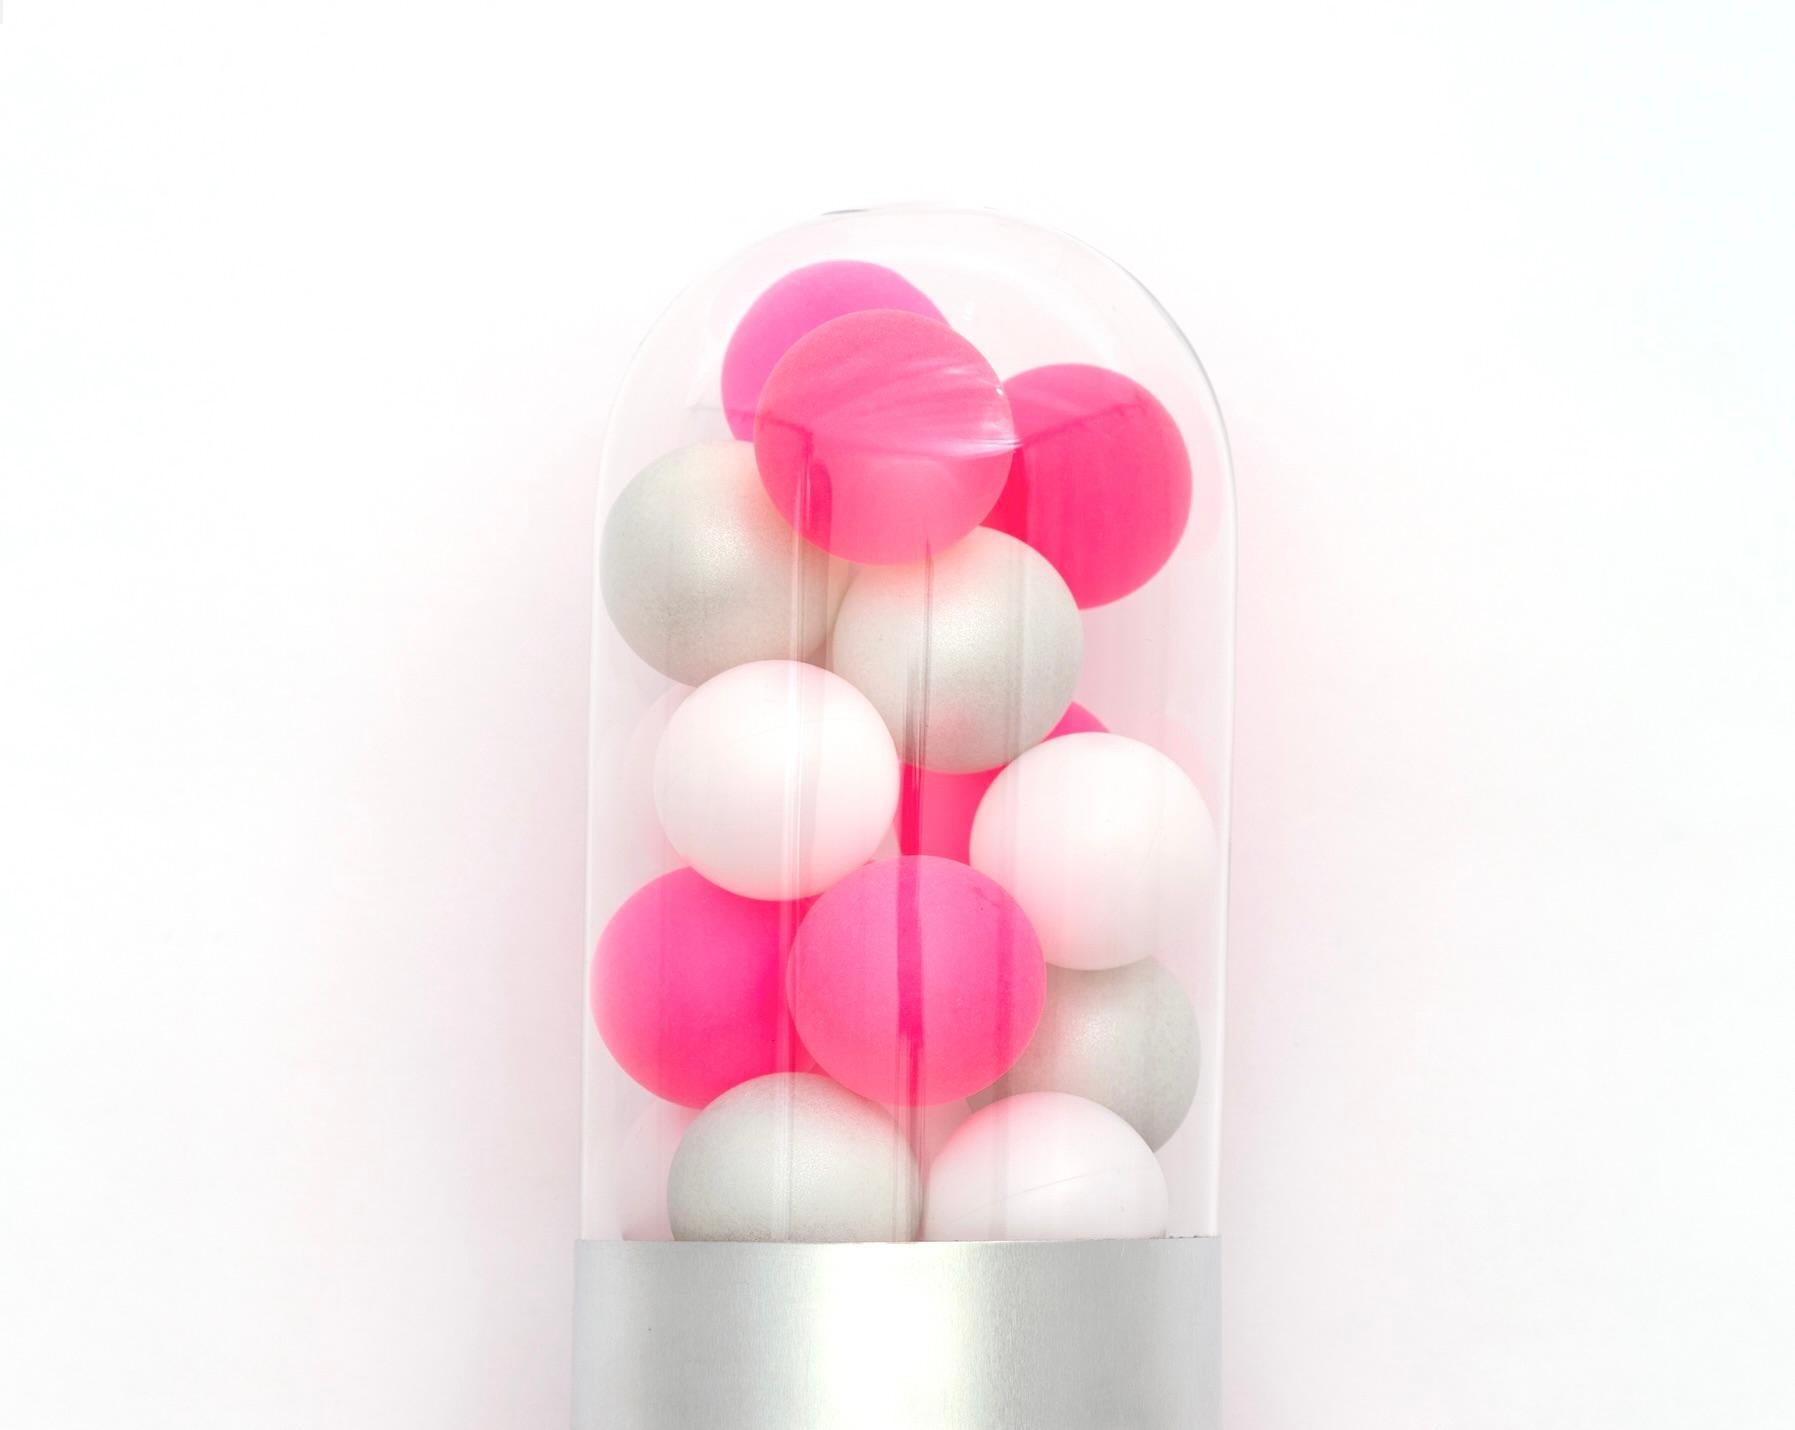 XOXOXO (Hugs & Kisses) - Rosa Glas pillen-Wandskulptur (Moderne) im Angebot